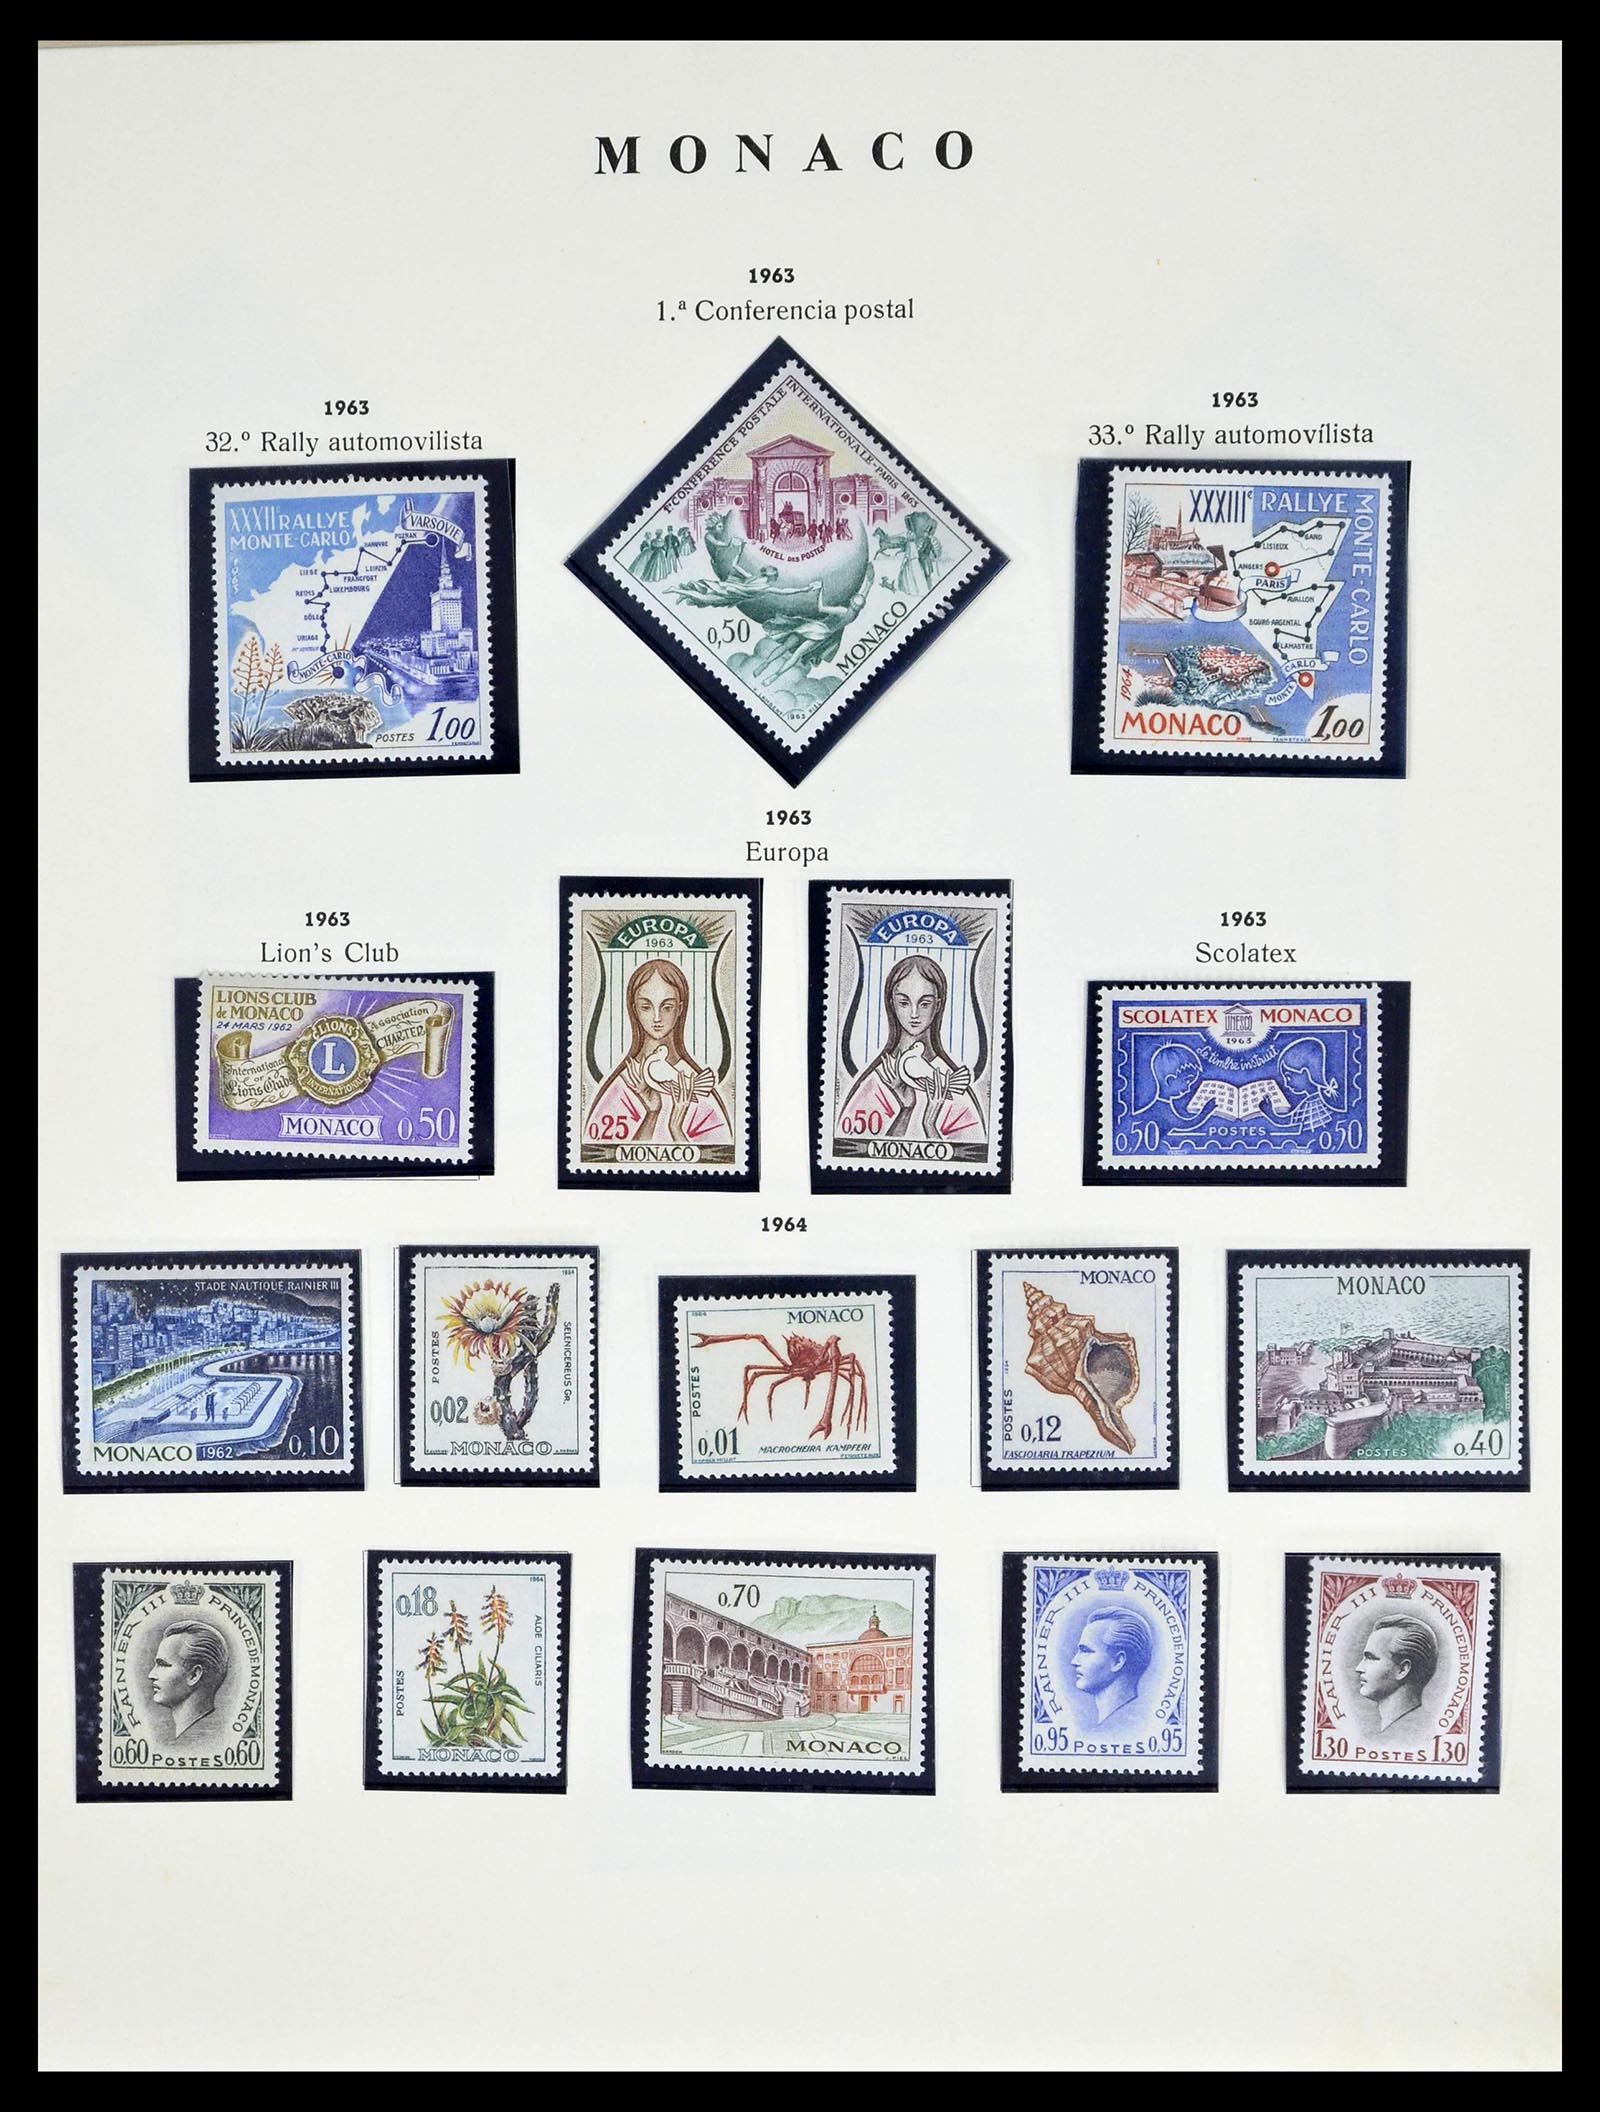 39082 0041 - Stamp collection 39082 Monaco 1885-1964.